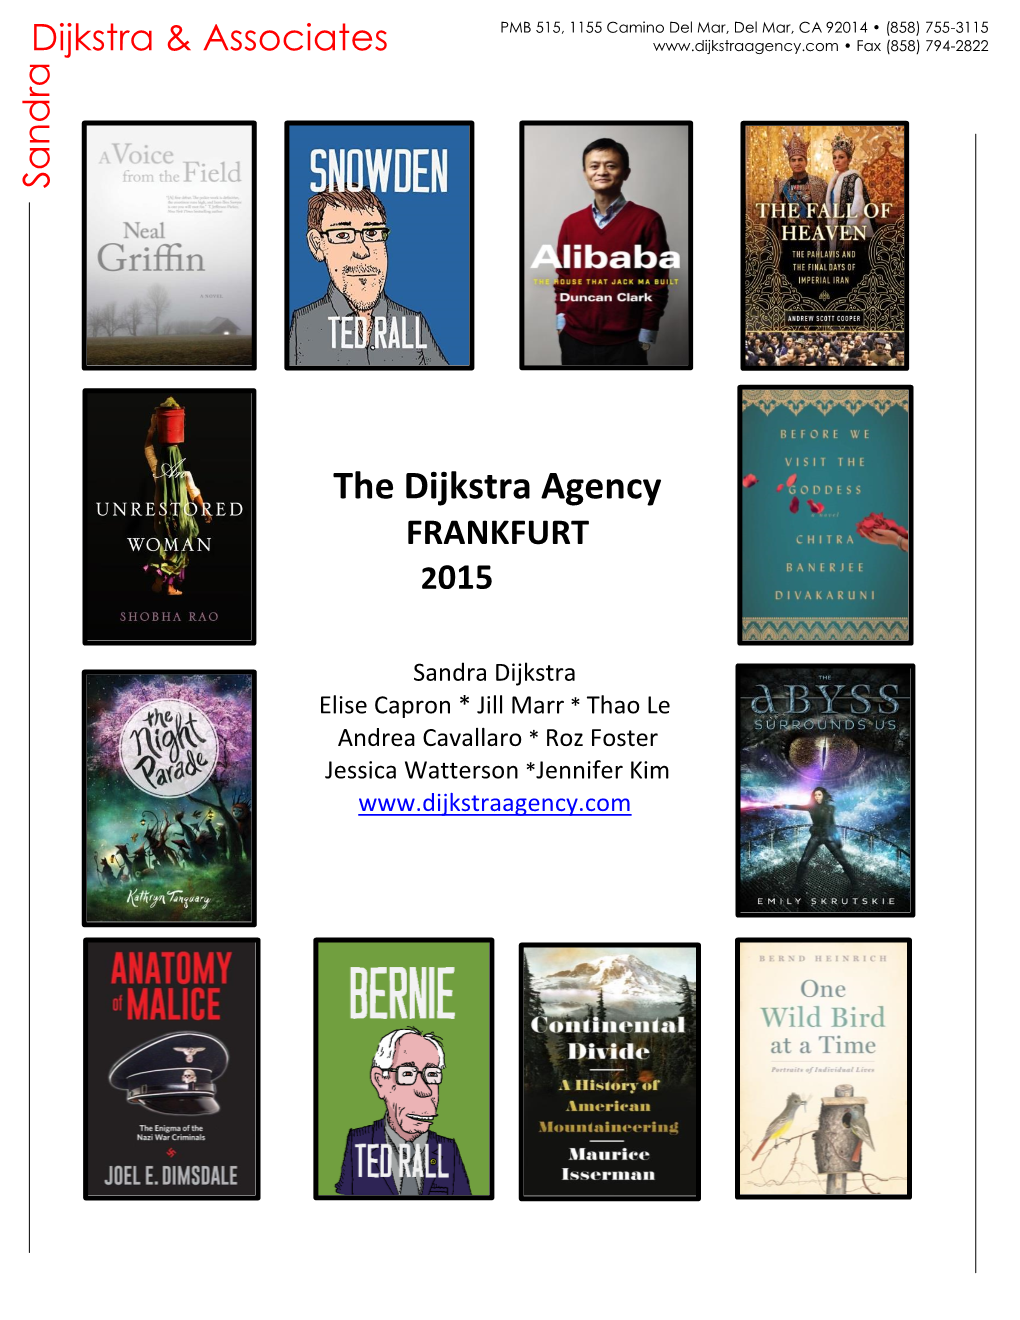 The Dijkstra Agency